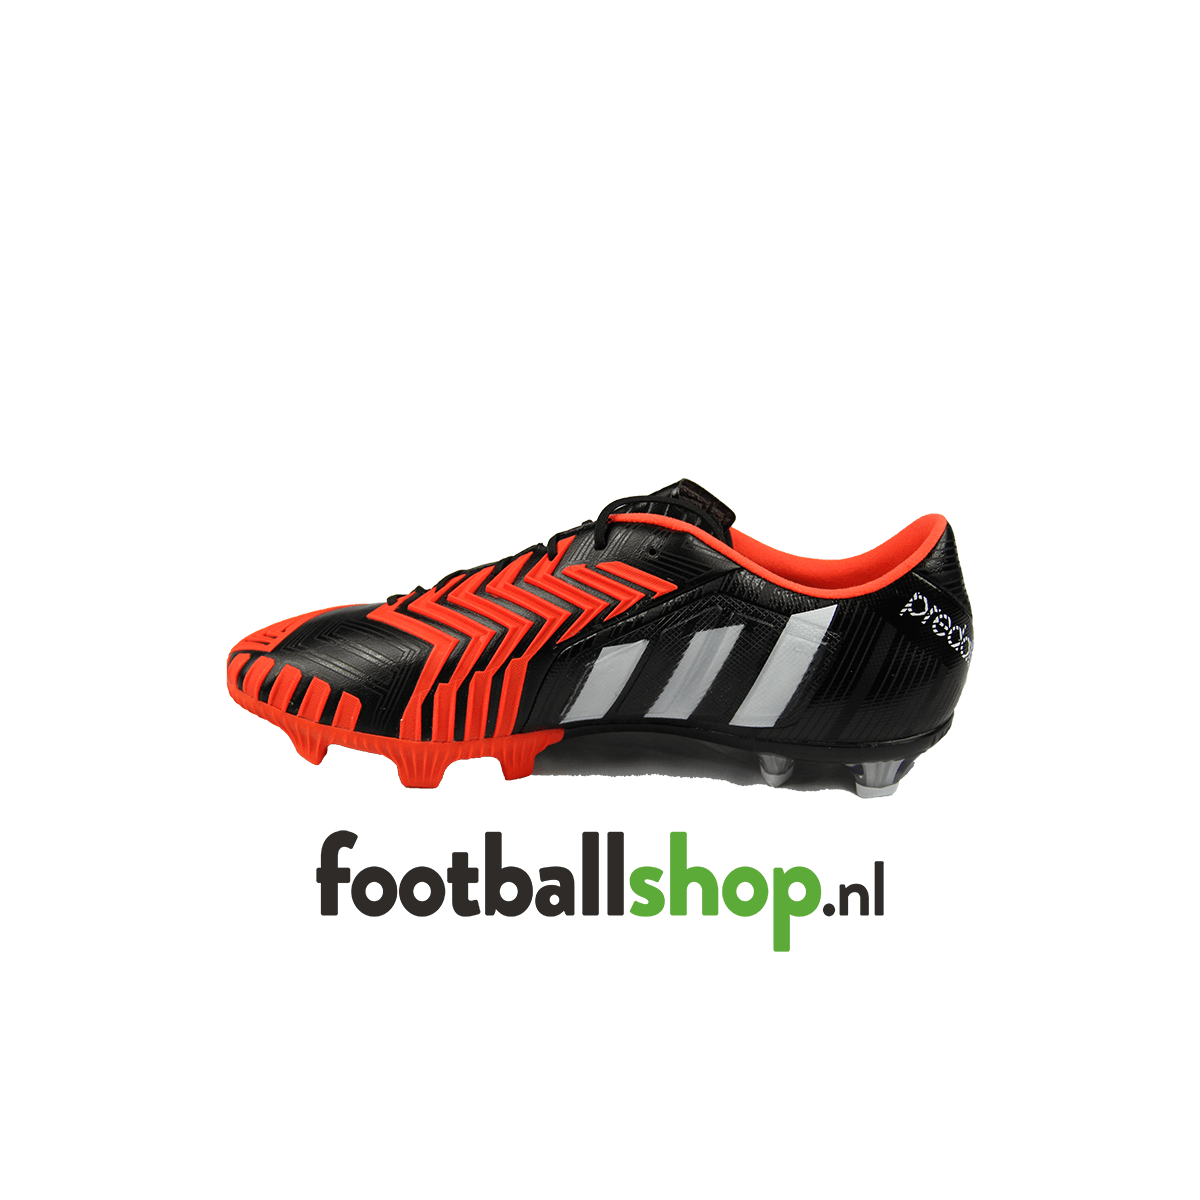 neerhalen Glimp Verder Adidas Predator Instinct TRX FG – Zwart/Rood kopen - Footballshop.nl -  Footballshop.nl